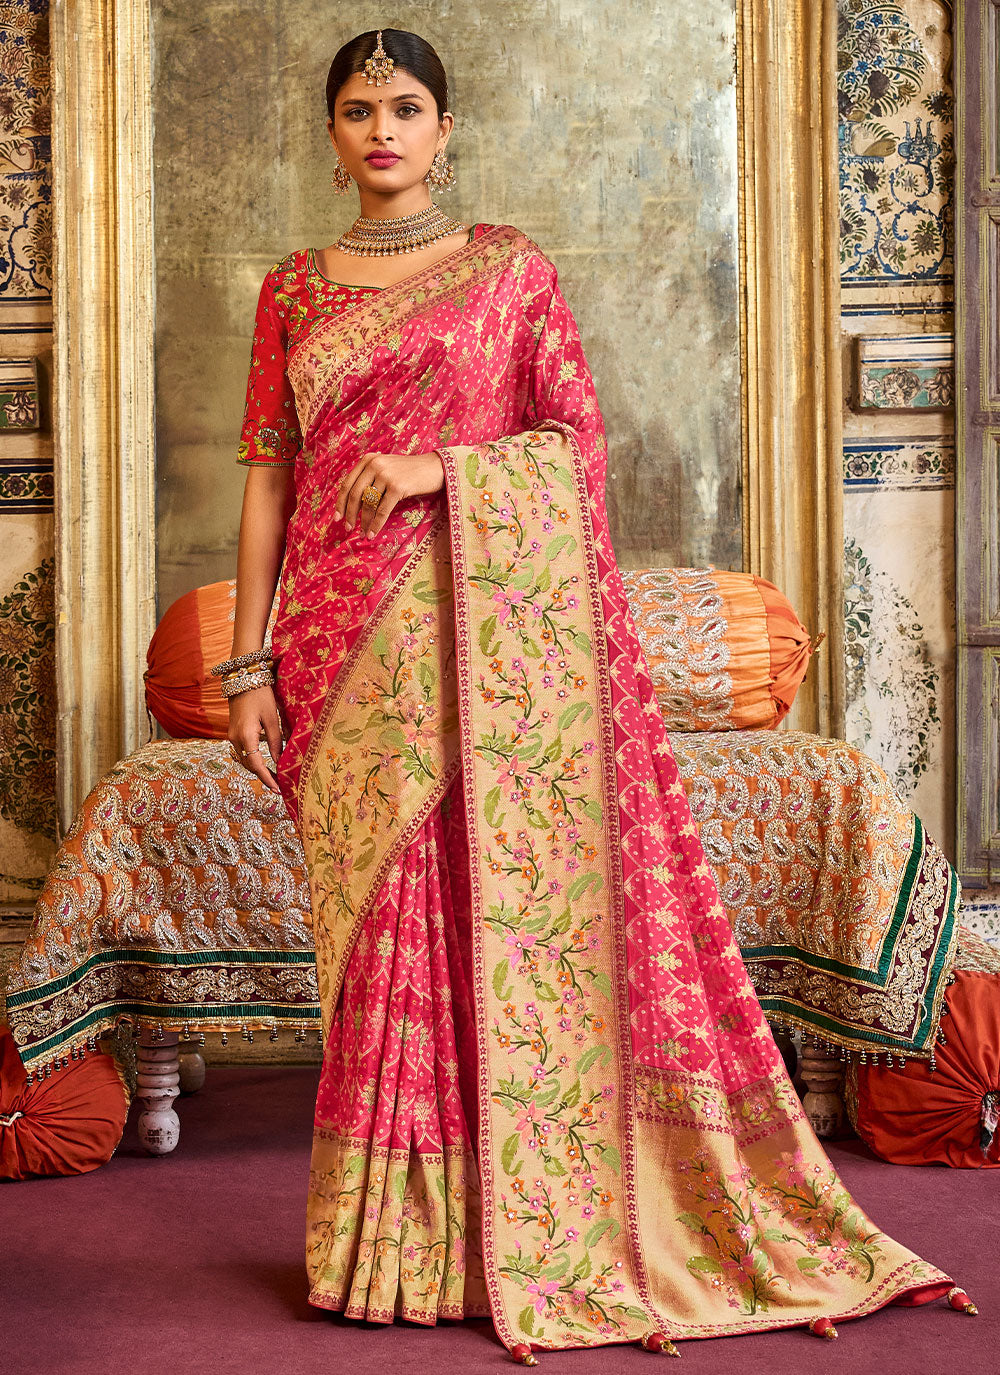 Pink Embroidered Wedding Designer Saree